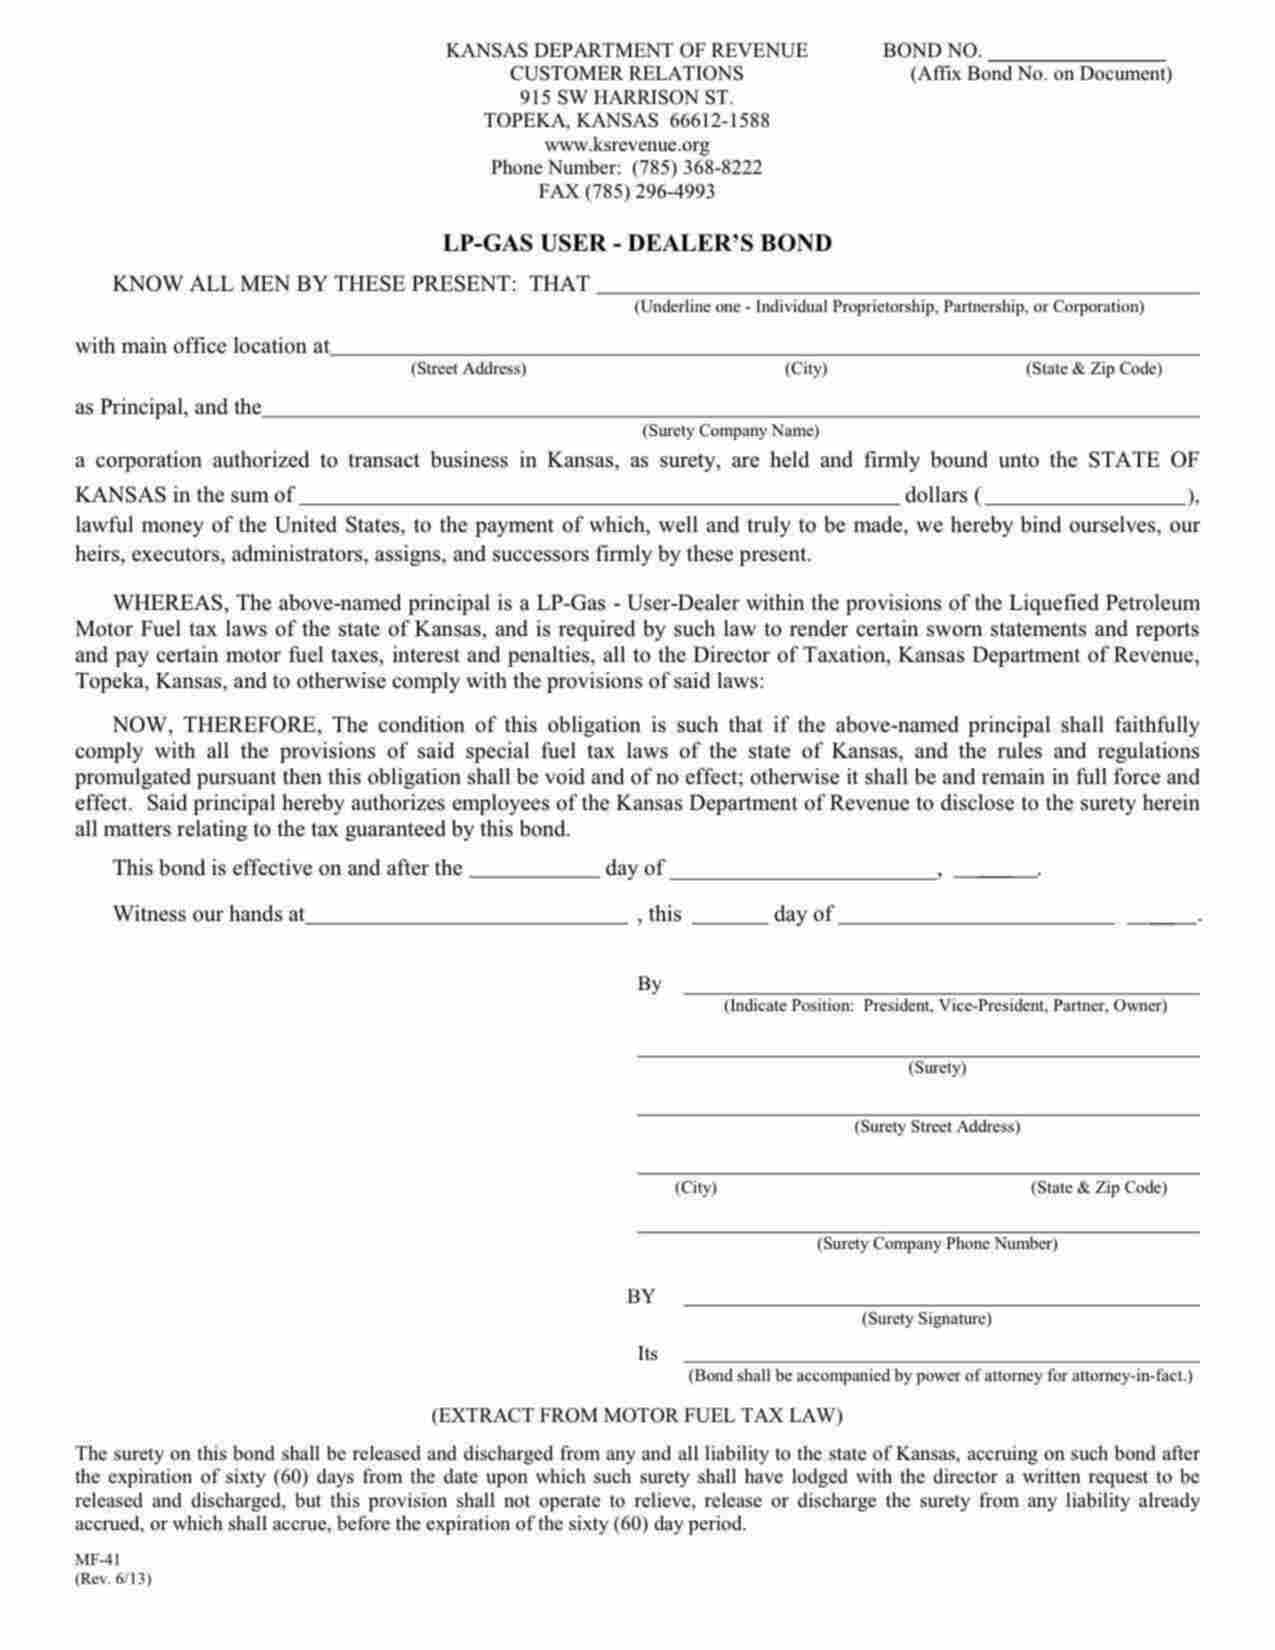 Kansas Liquid Petroleum-Gas (LP-Gas) User-Dealer Bond Form